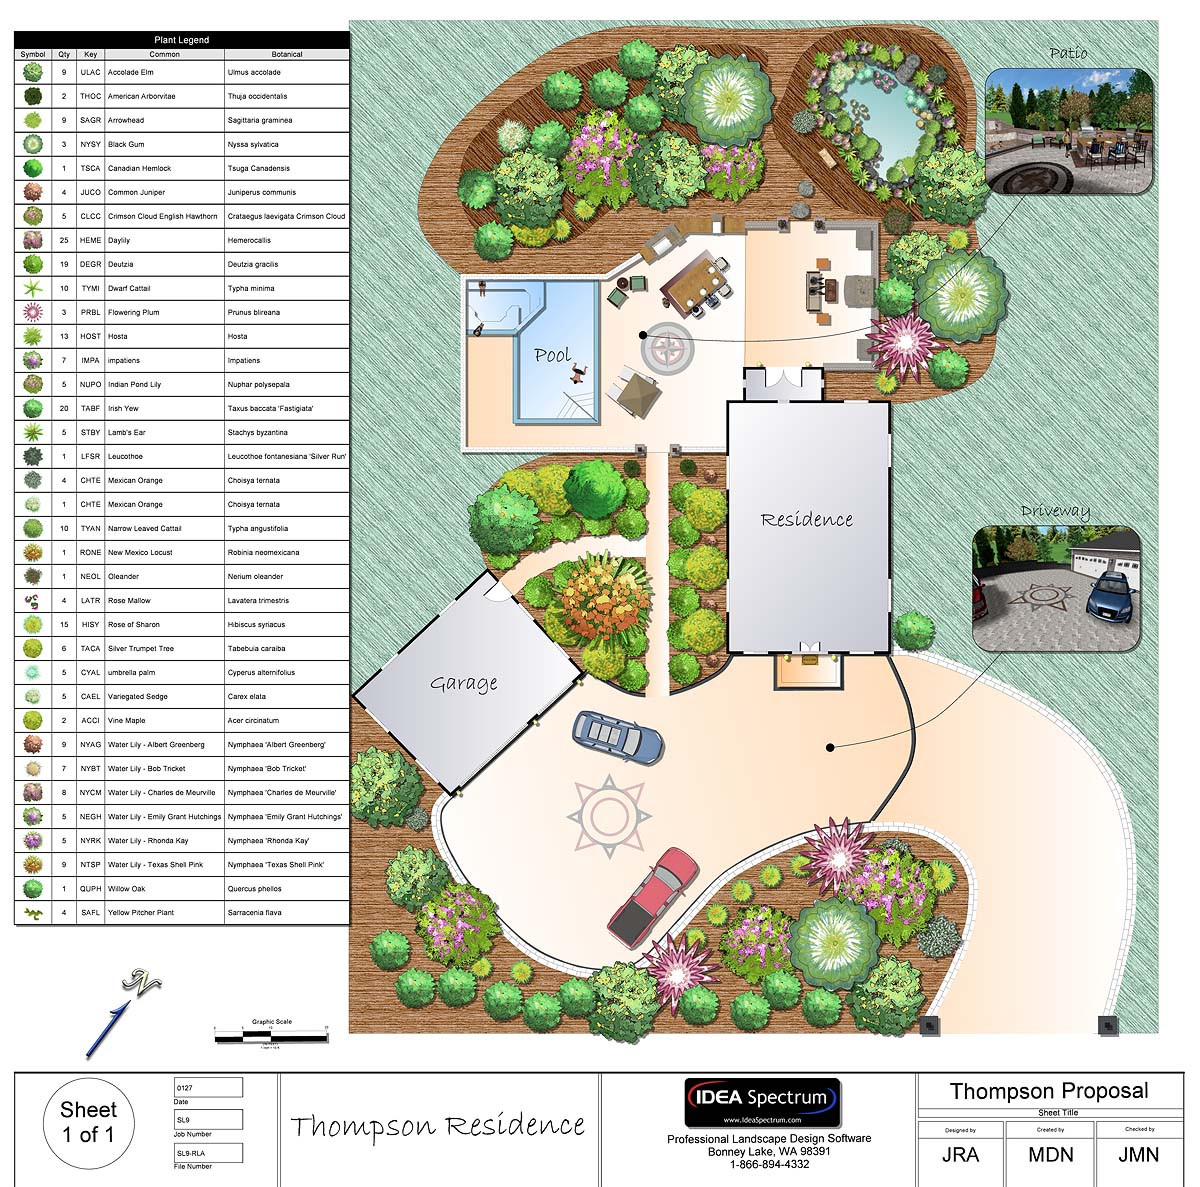 Best ideas about Landscape Design Plans
. Save or Pin Professional Landscape Software Now.